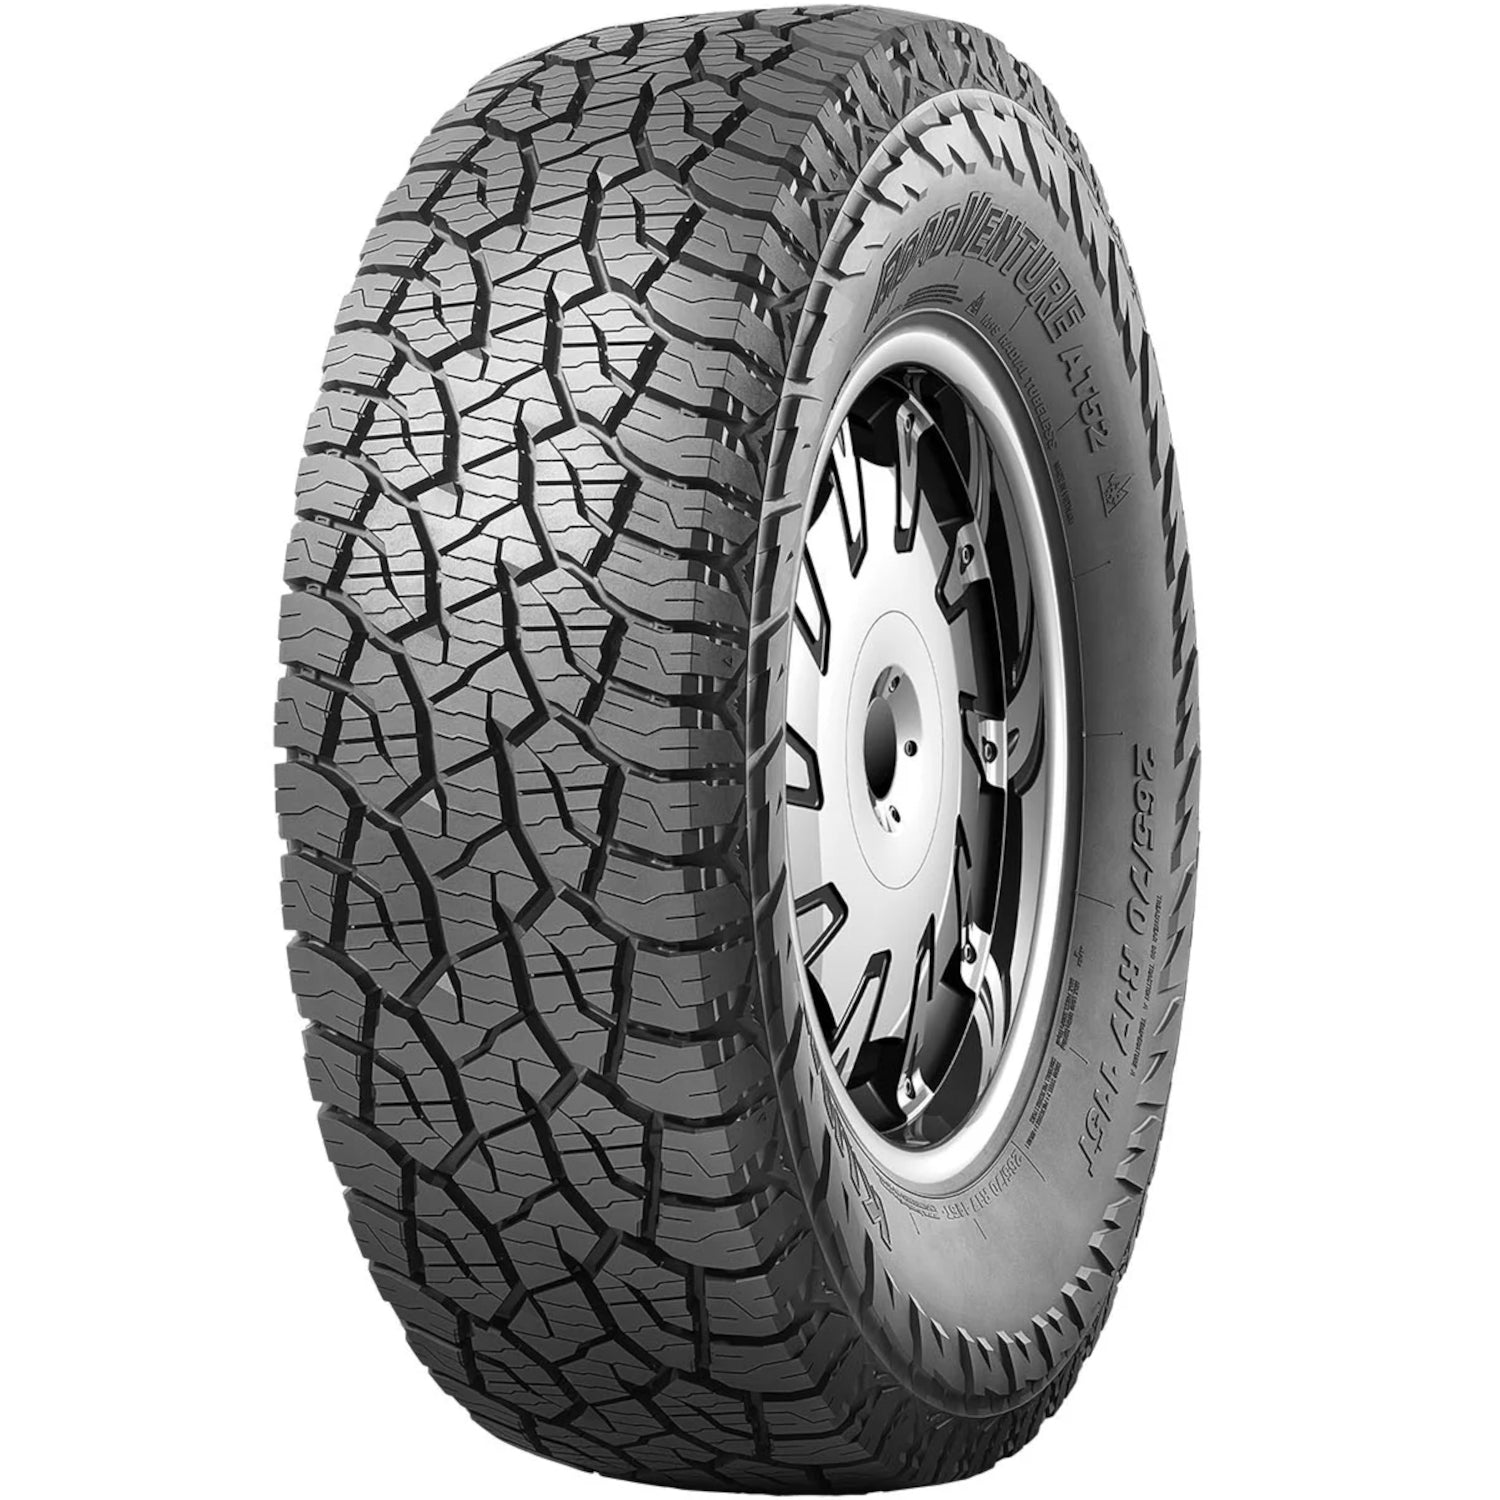 KUMHO ROAD VENTURE AT52 LT265/70R18 (32.6X10.4R 18) Tires